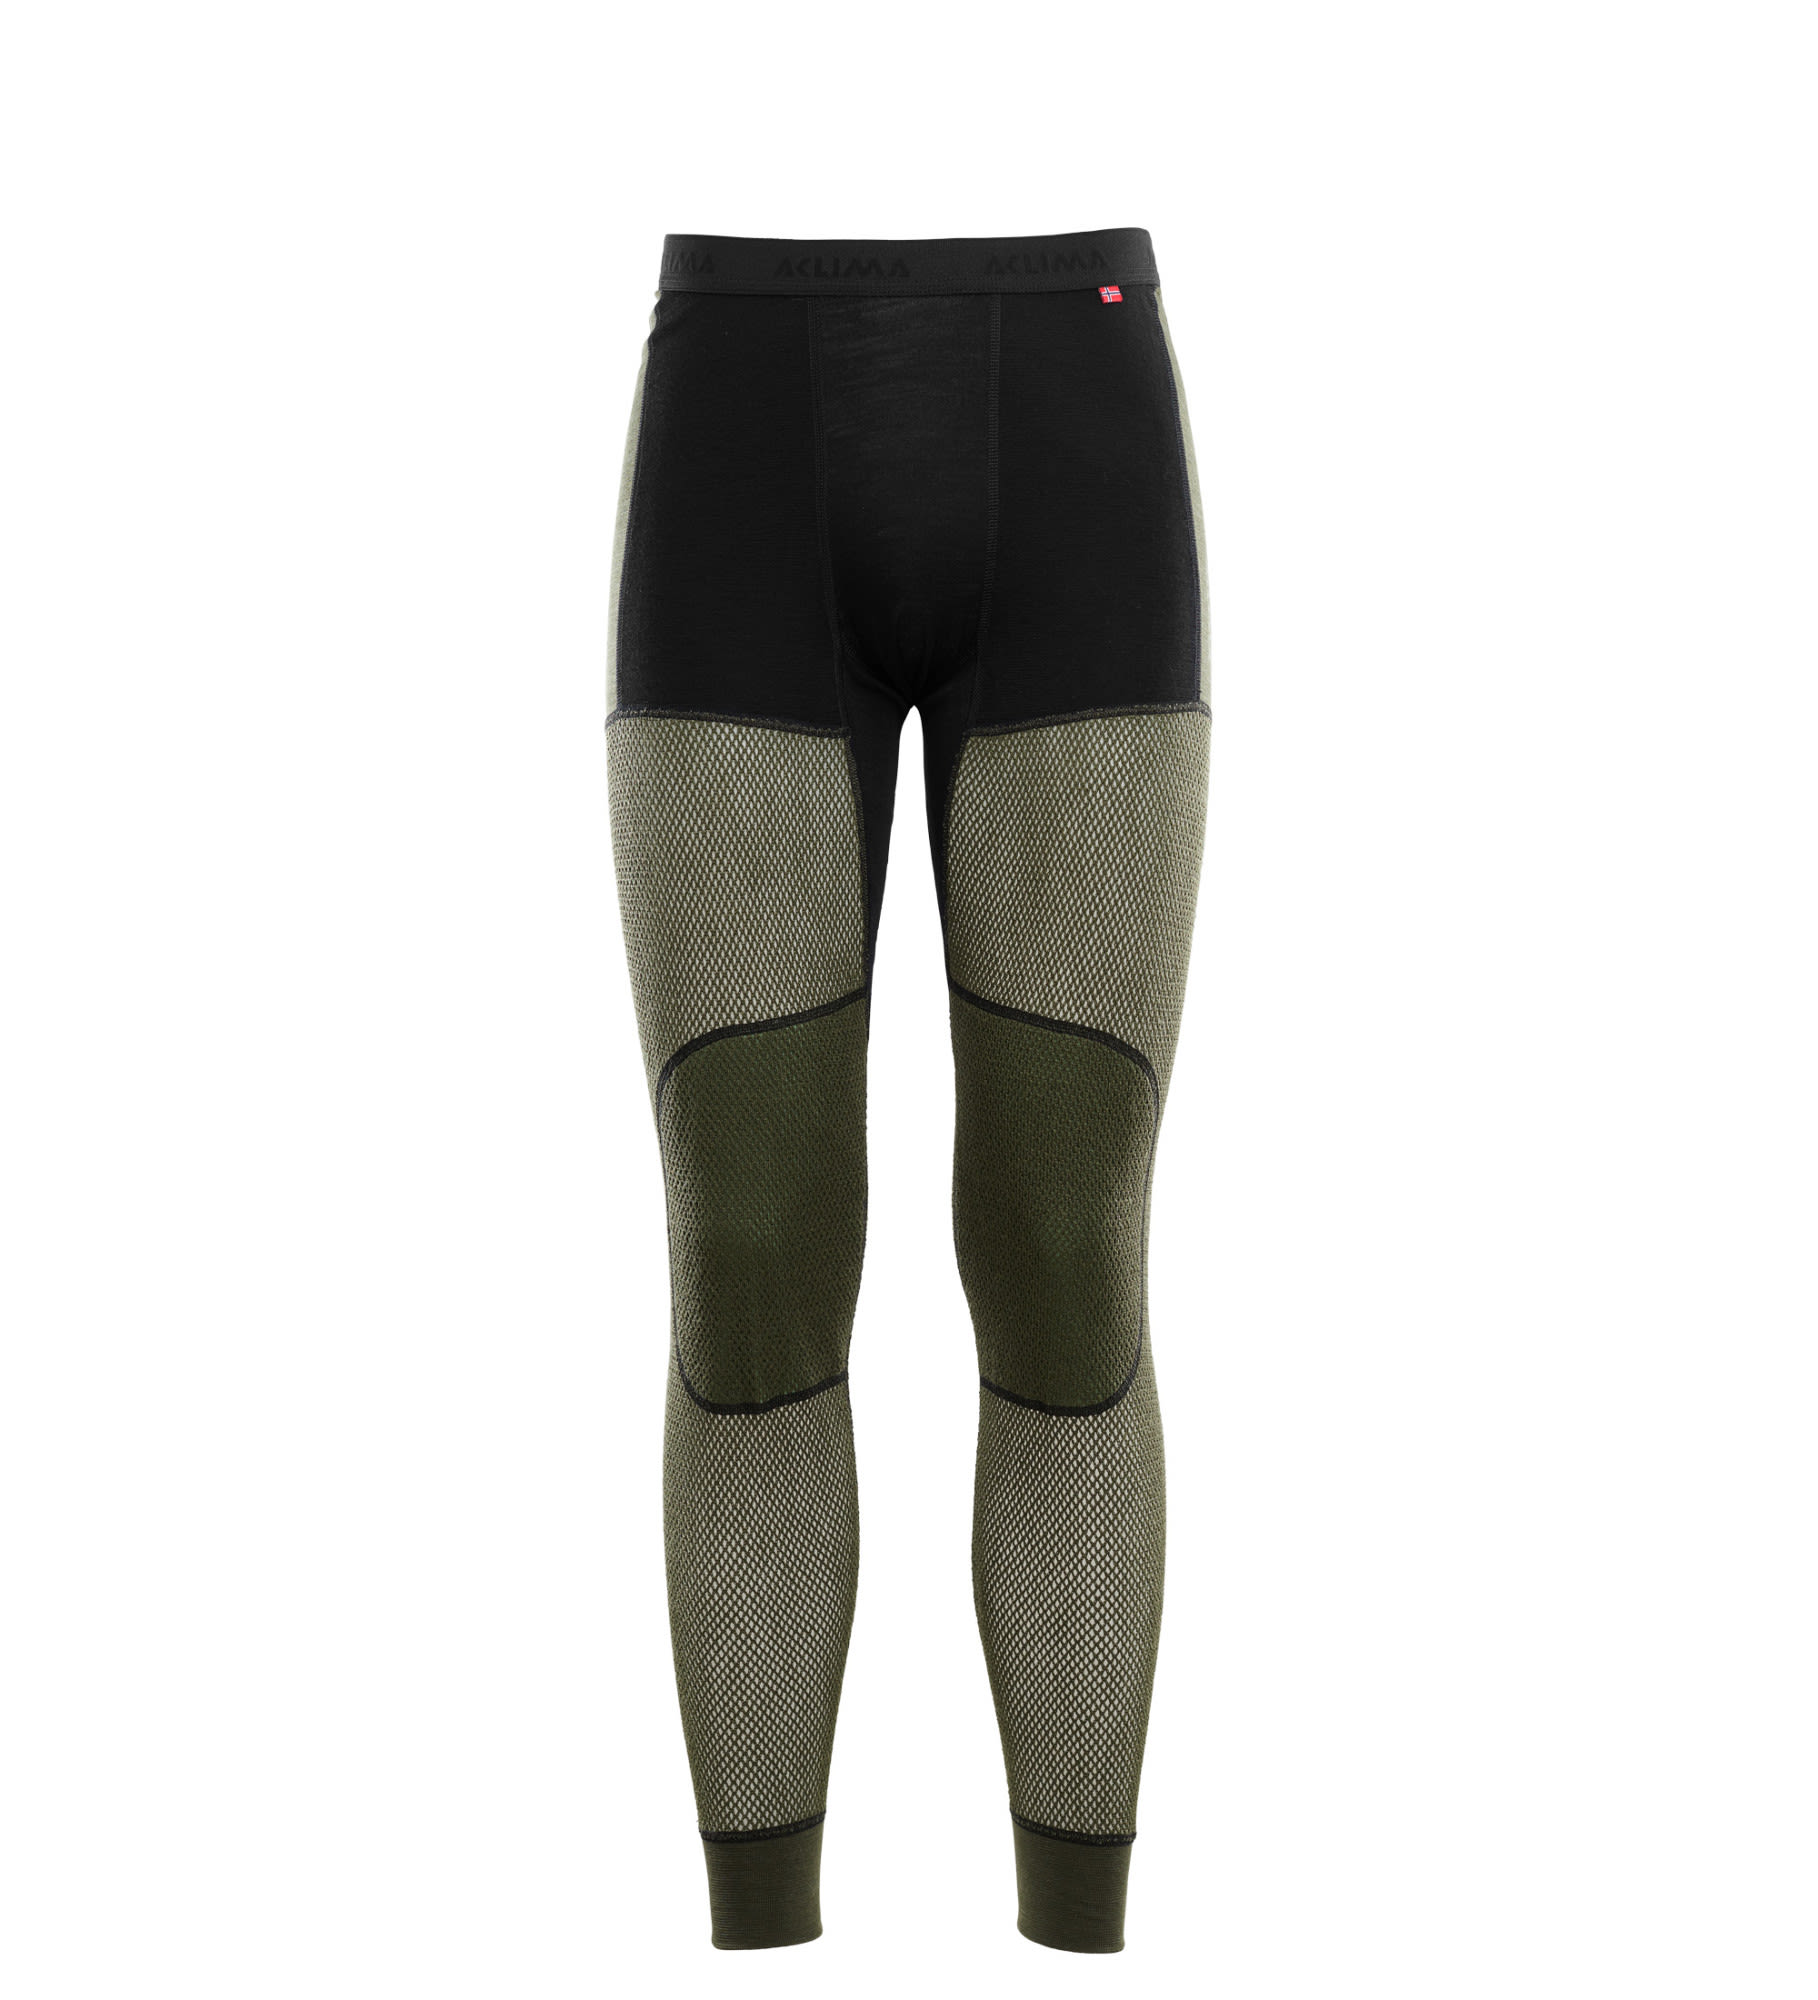 Aclima Woolnet Hybrid Long Pants Oliv- Male Merino Leggings und Tights- Grsse XS - Farbe Jet Black - Olive Night - Dill unter Aclima